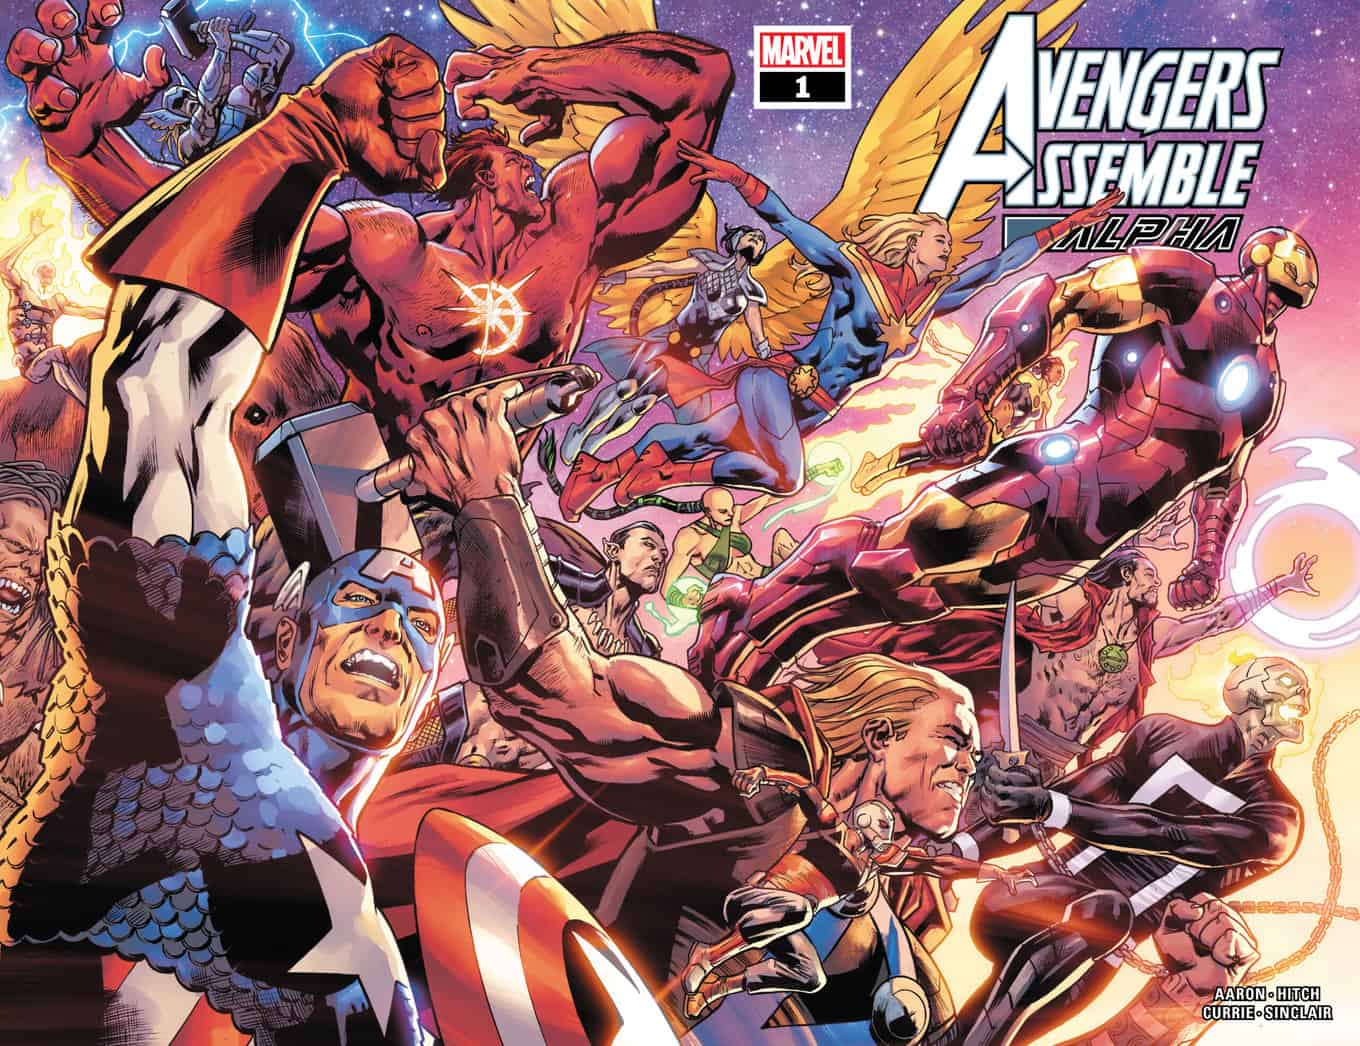 Avengers Assemble Alpha #1 spoilers 0-1